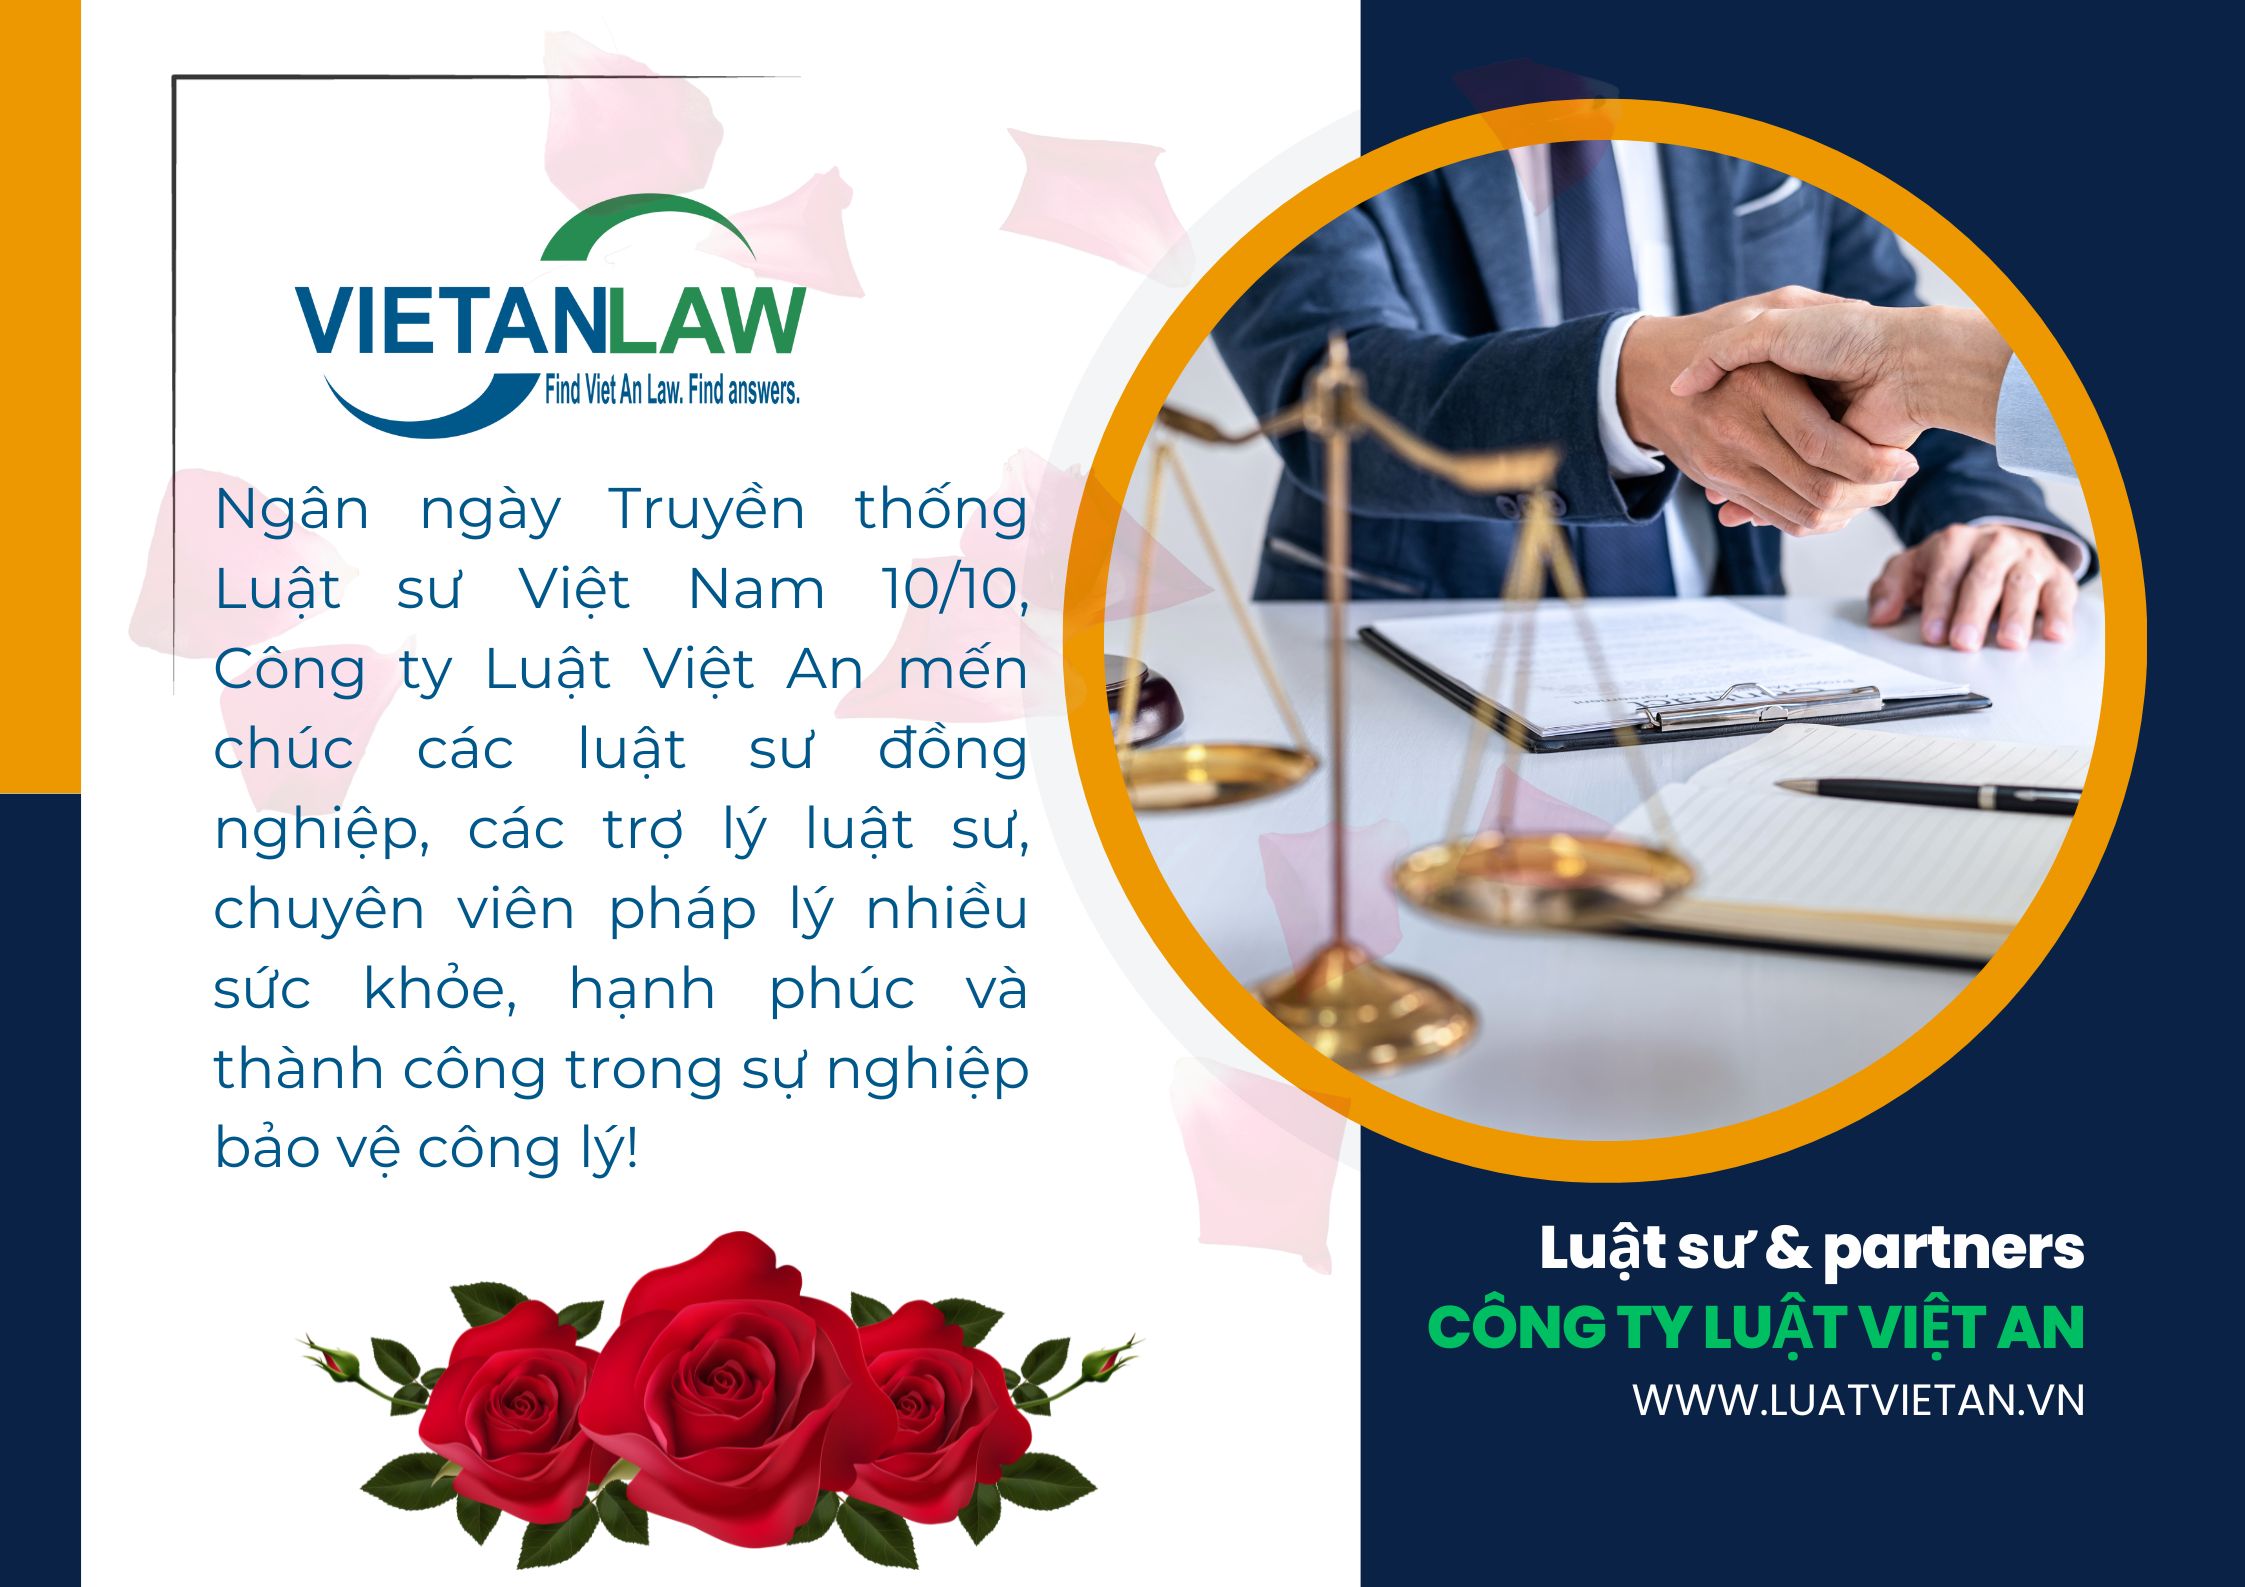 Luật sư Việt Nam 1010, 2023